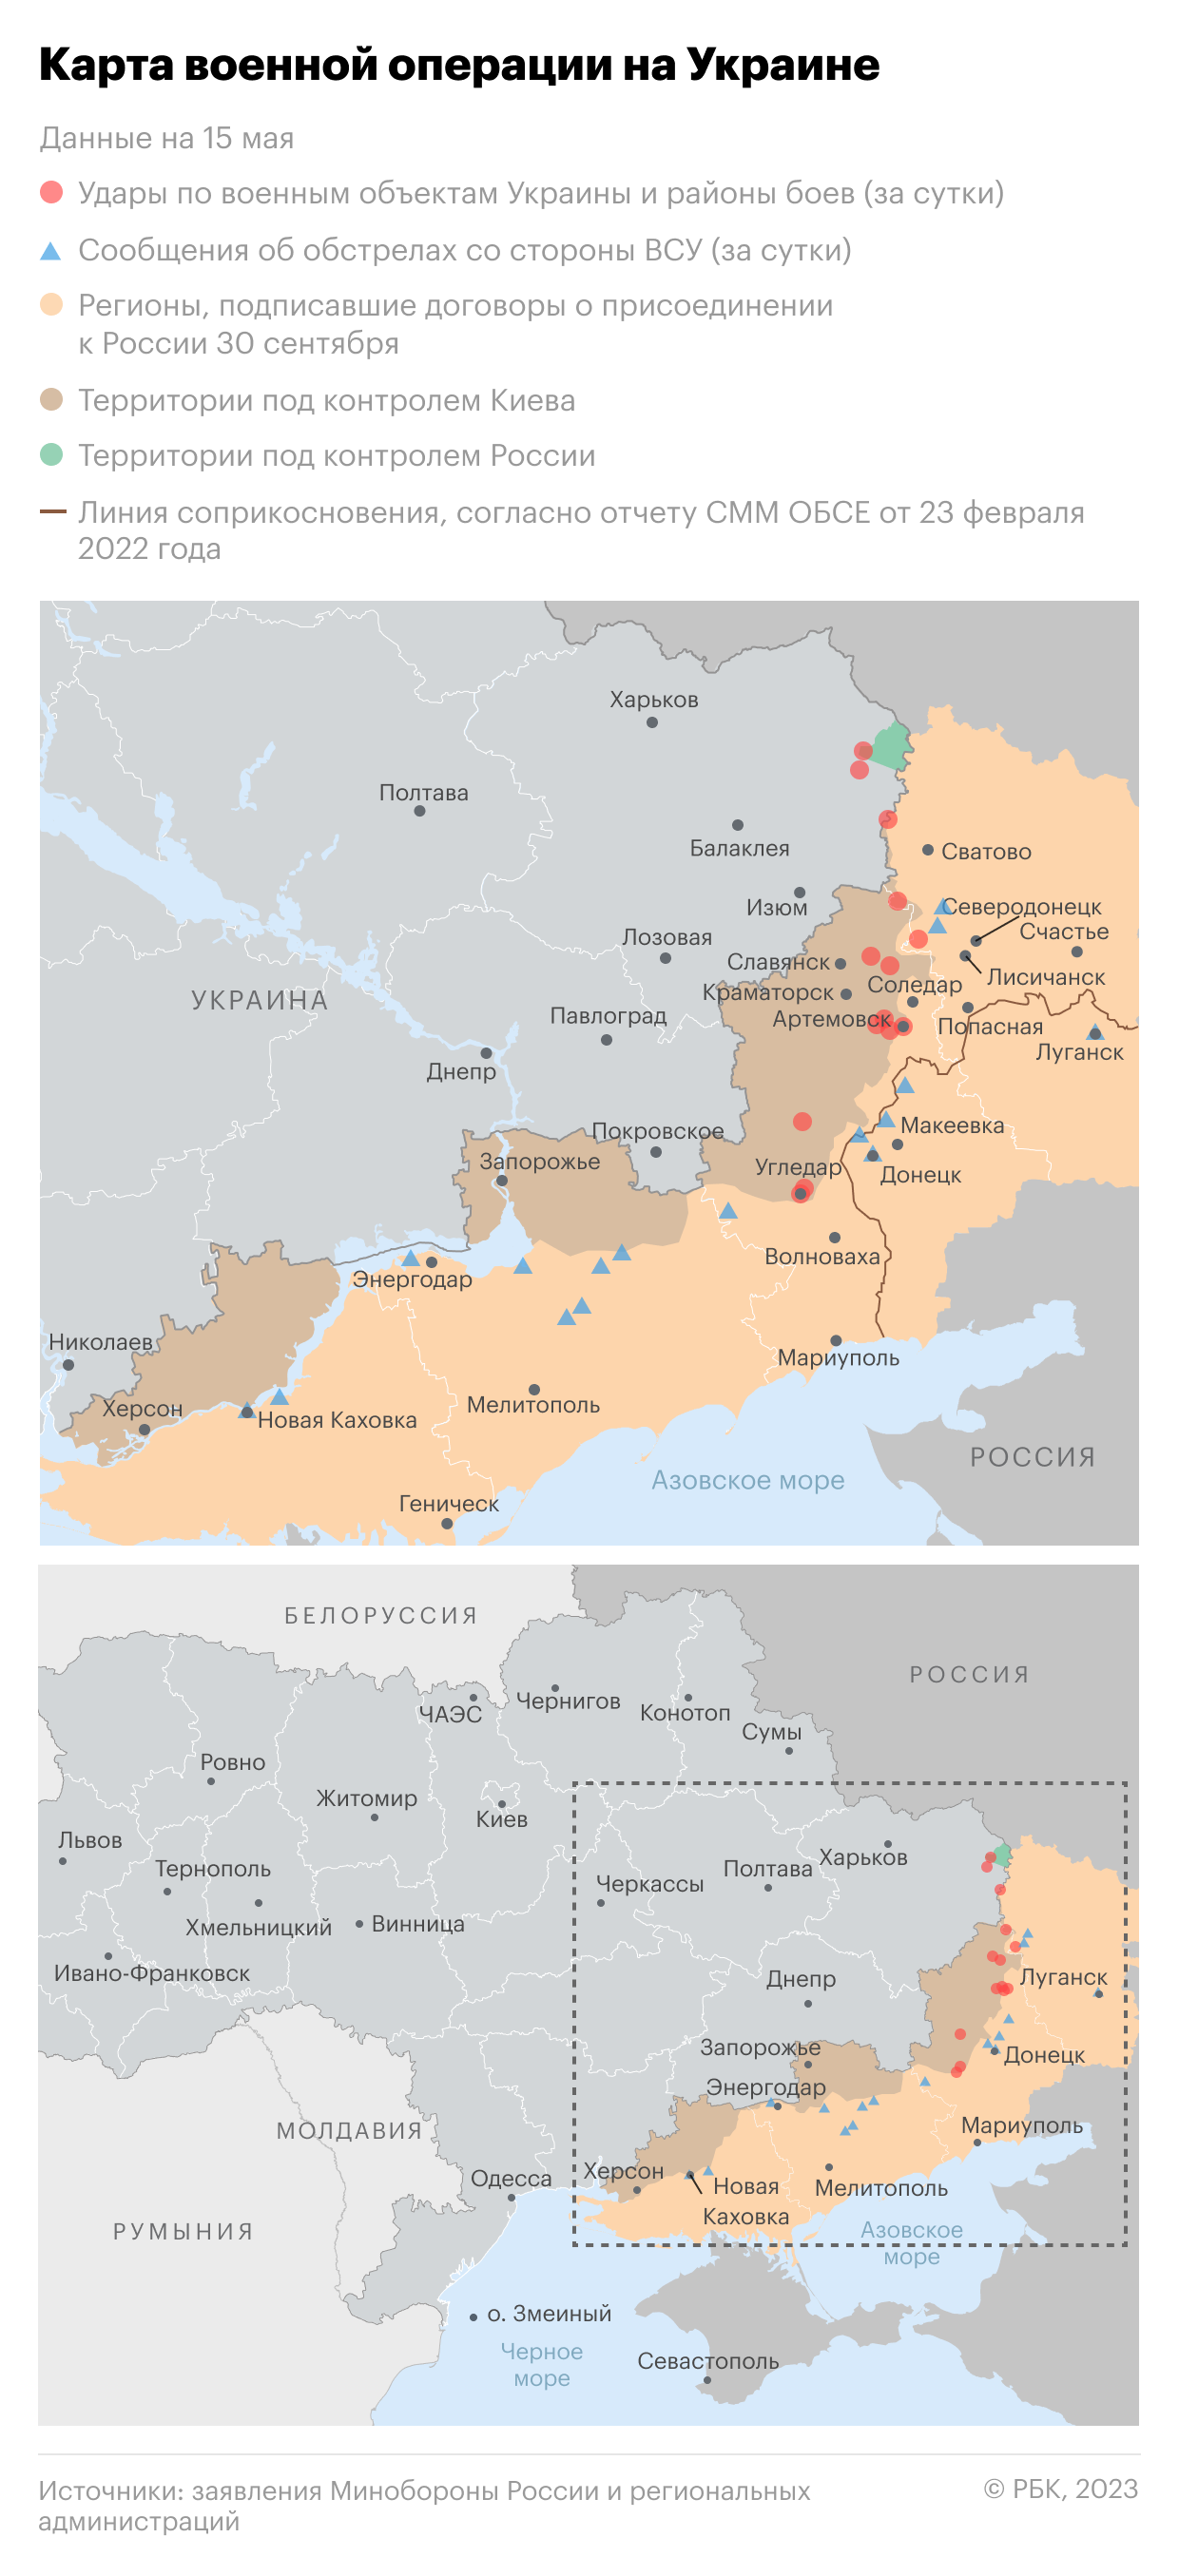 Военная операция на Украине. Карта на 15 мая